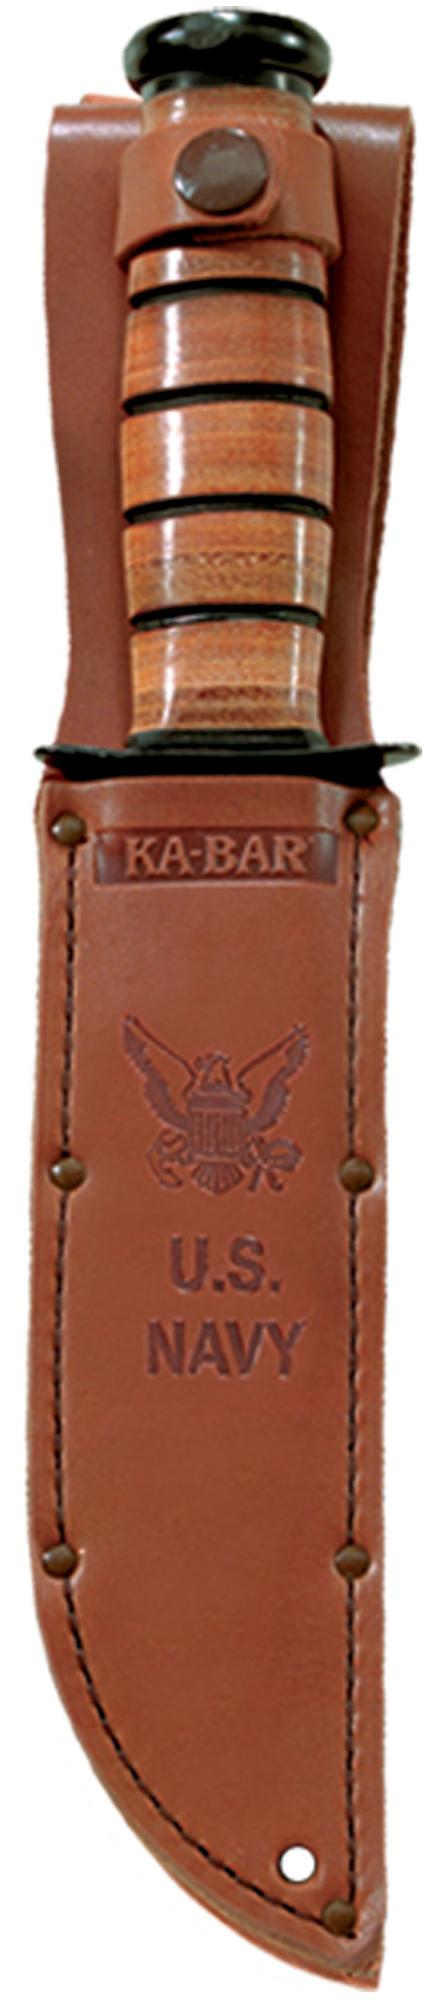 US NAVY KA-BAR®, (Straight Edge, Leather Sheath)